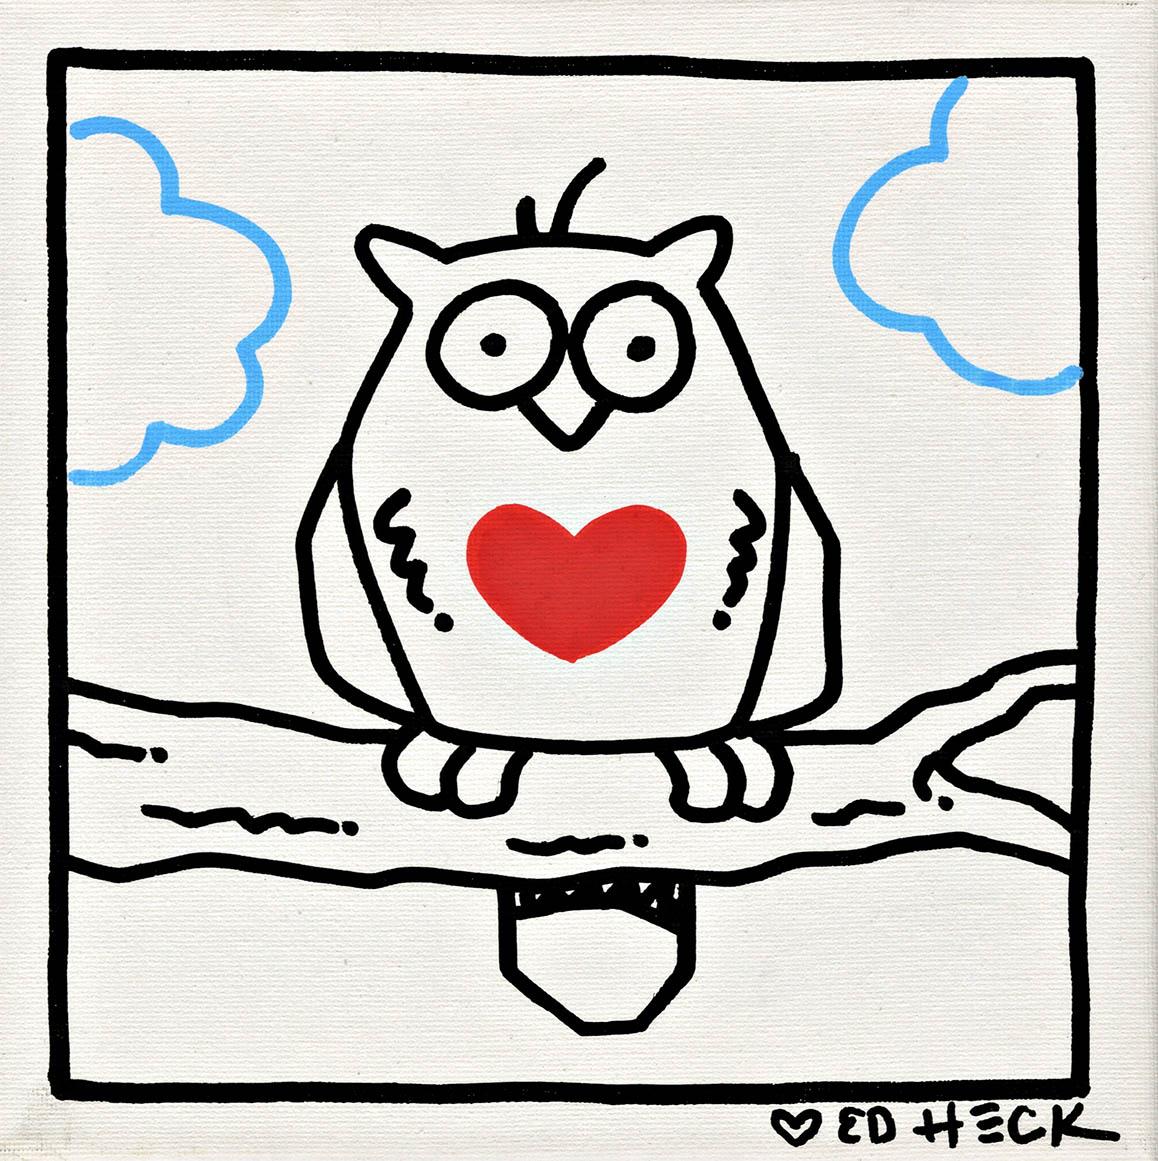 OWL LOVE